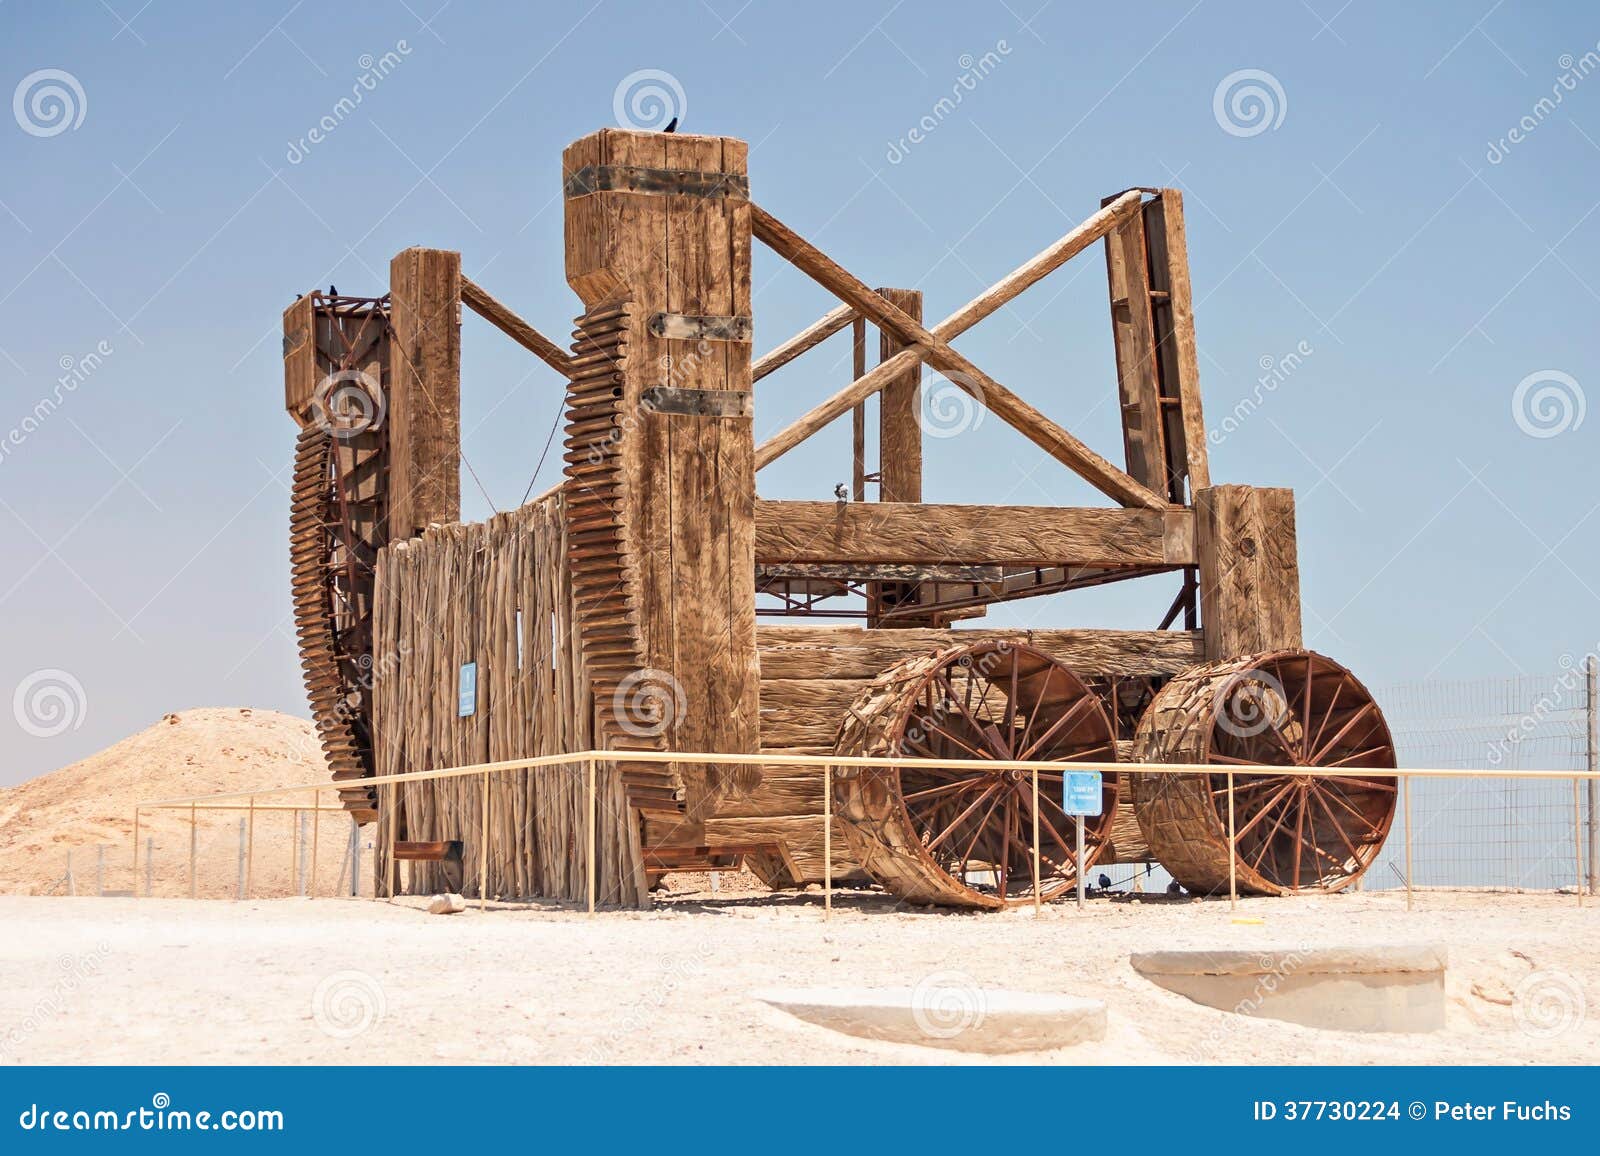 roman siege engine at masada in israel